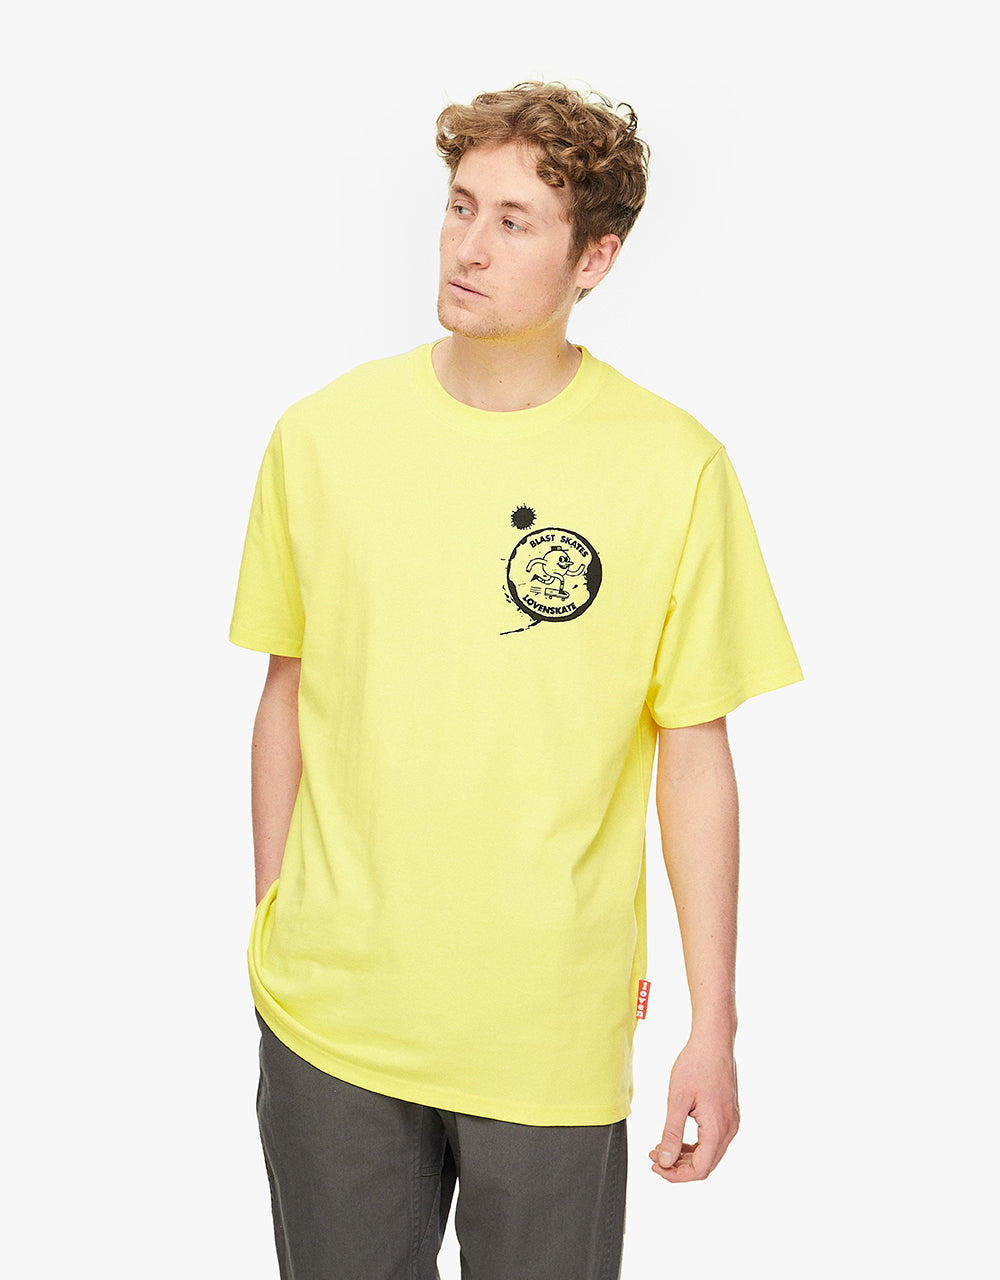 Lovenskate x Blast Drink Tea, Get Rad! T-Shirt - Yellow